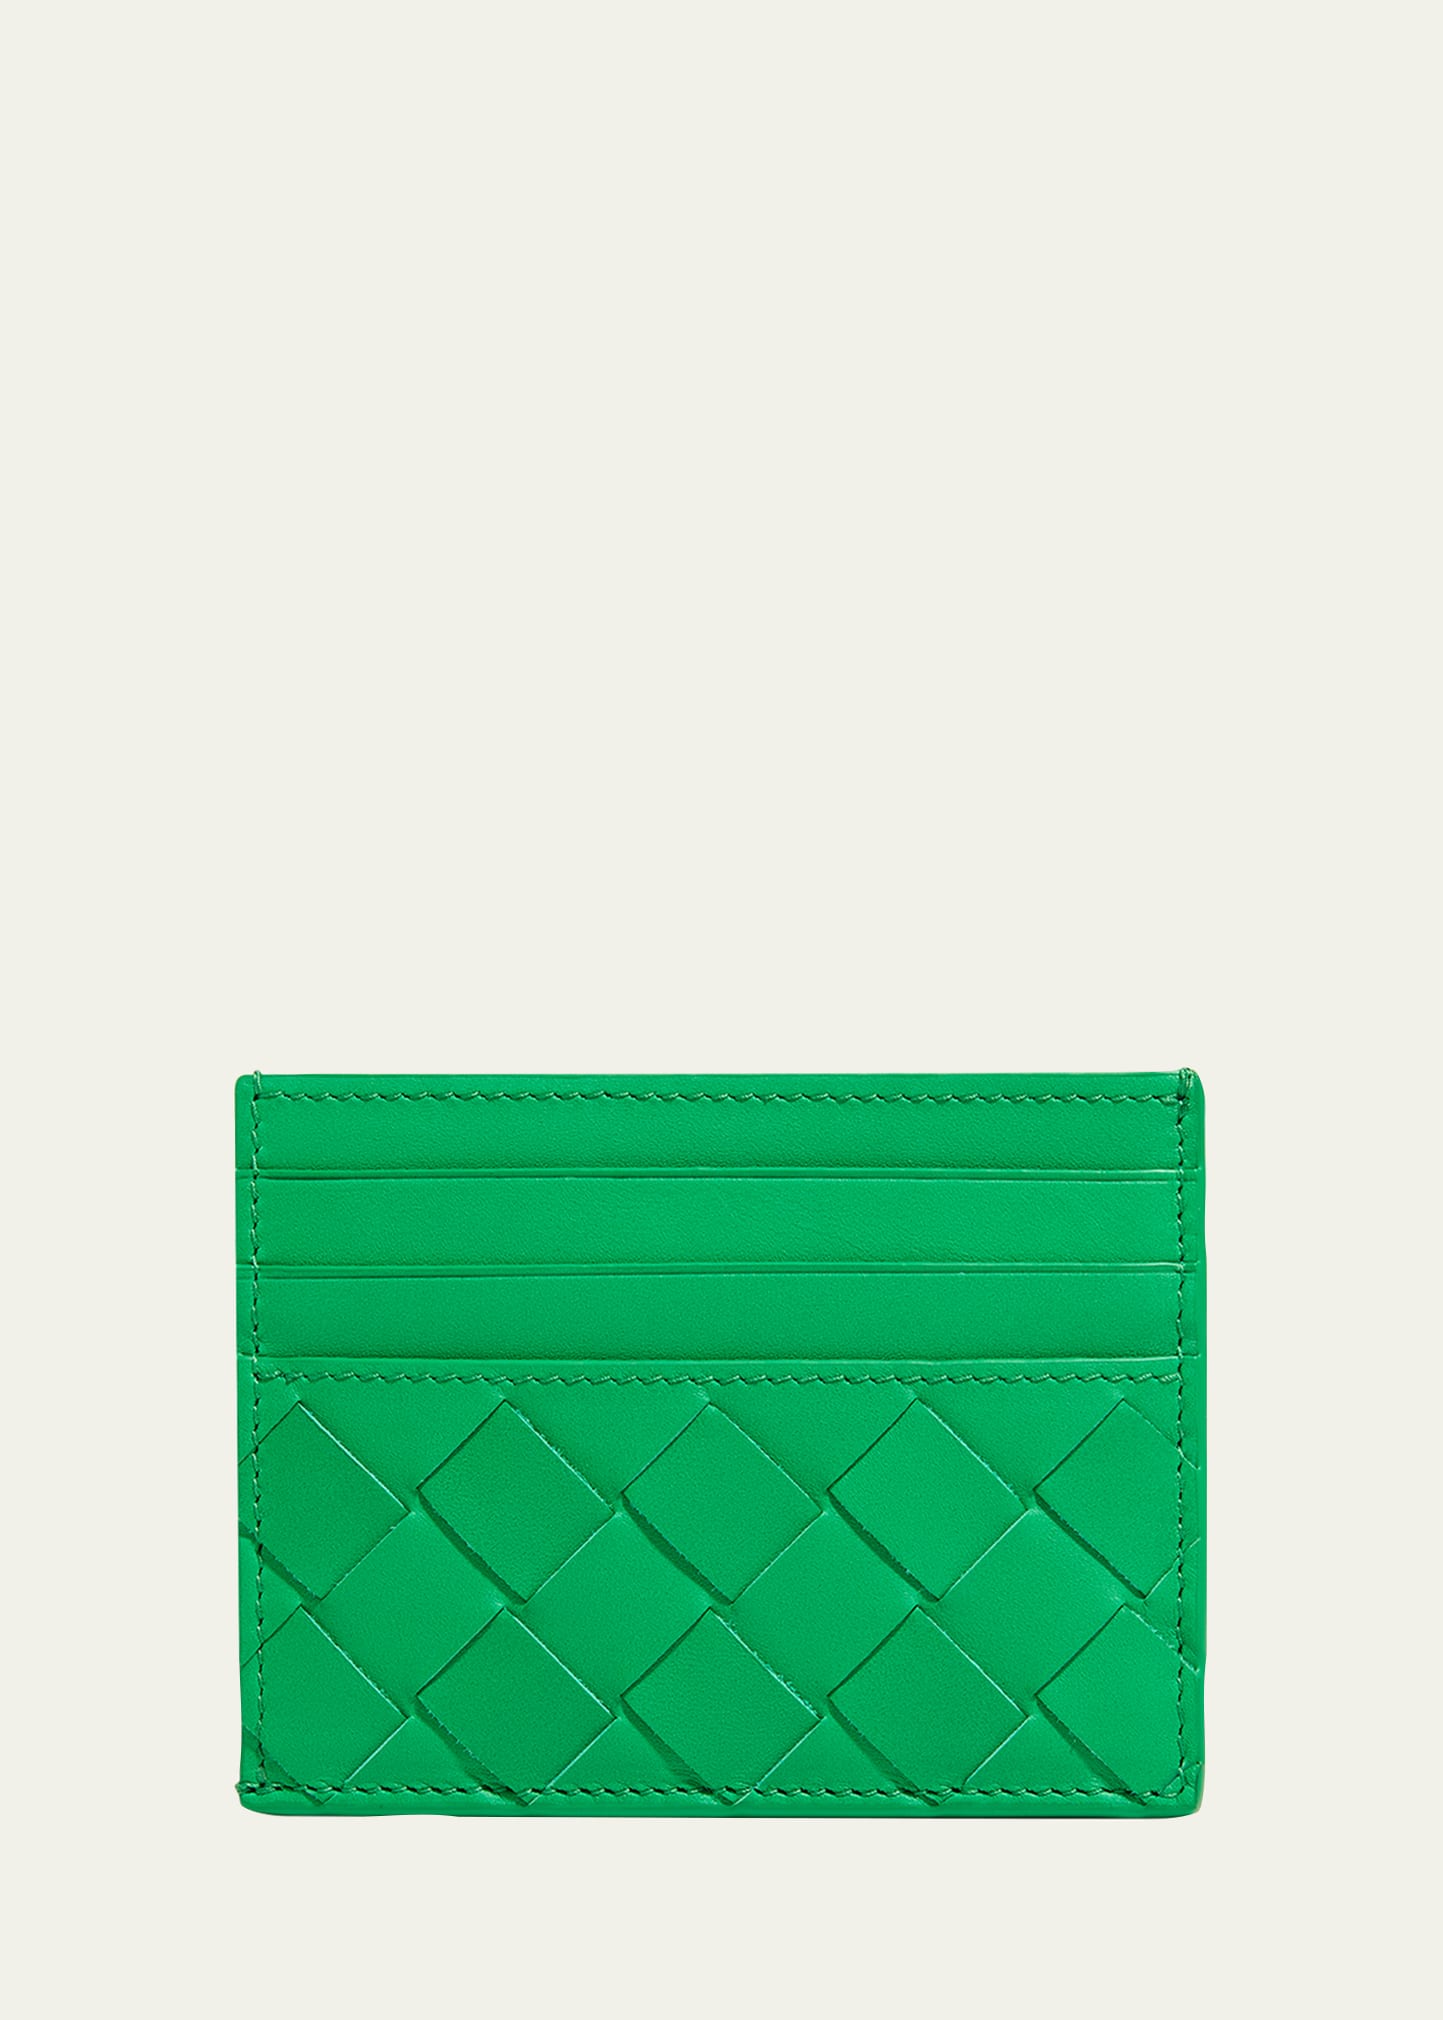 Bottega Veneta Men's Intrecciato Leather Card Case